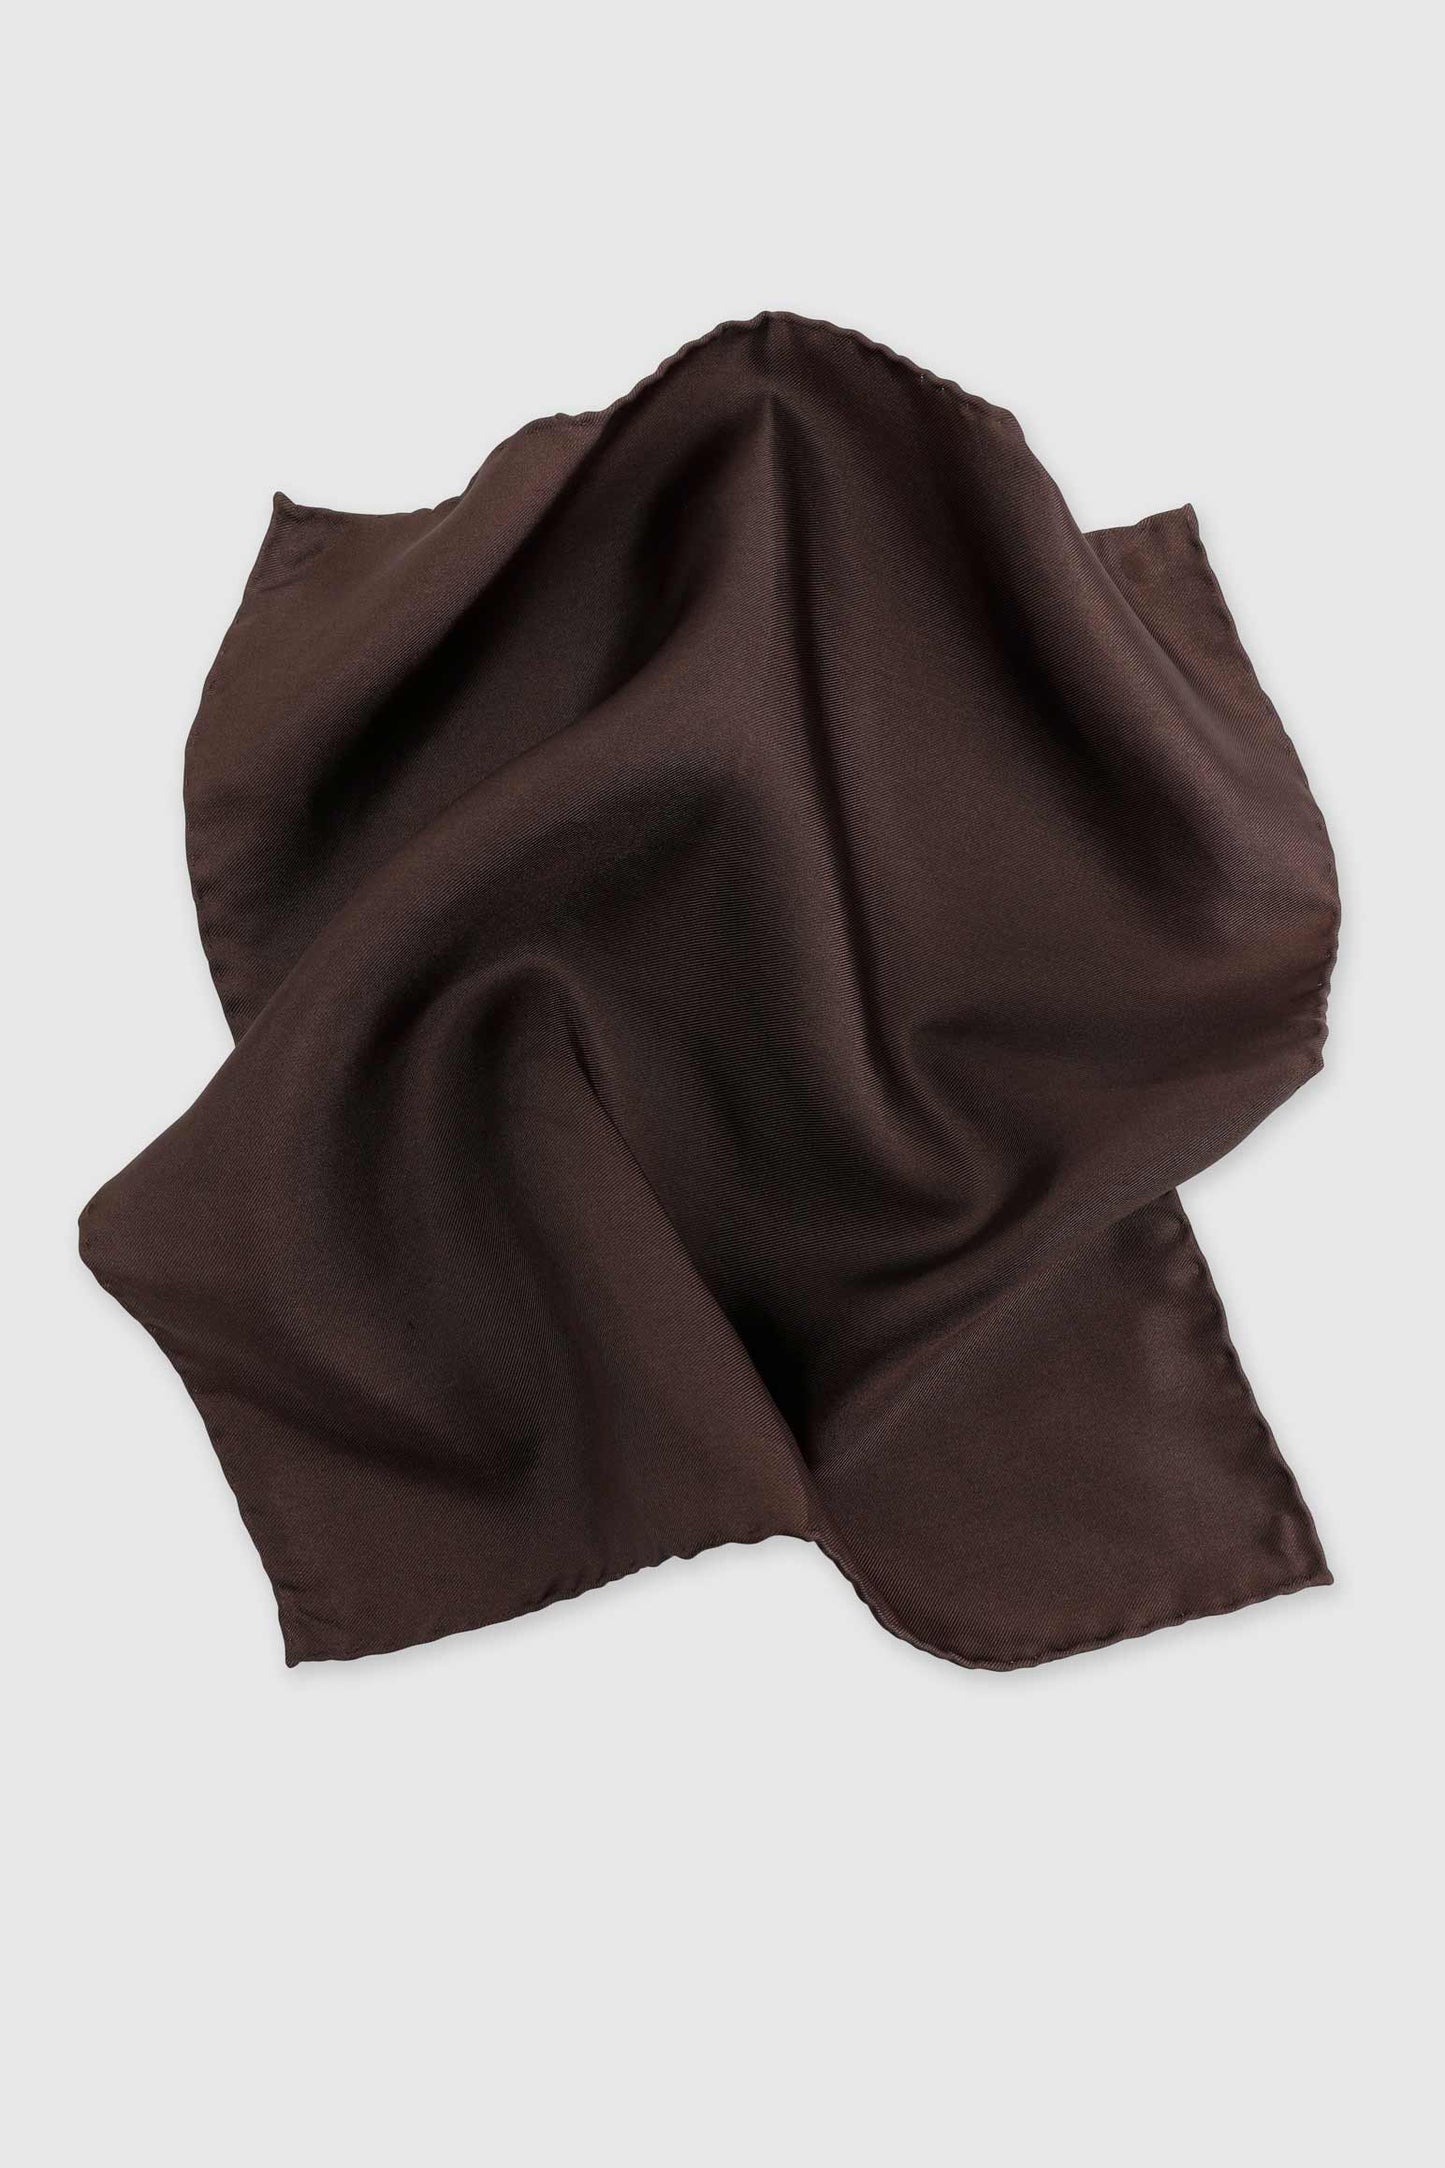 Pochette de costume faite main 100% soie marron